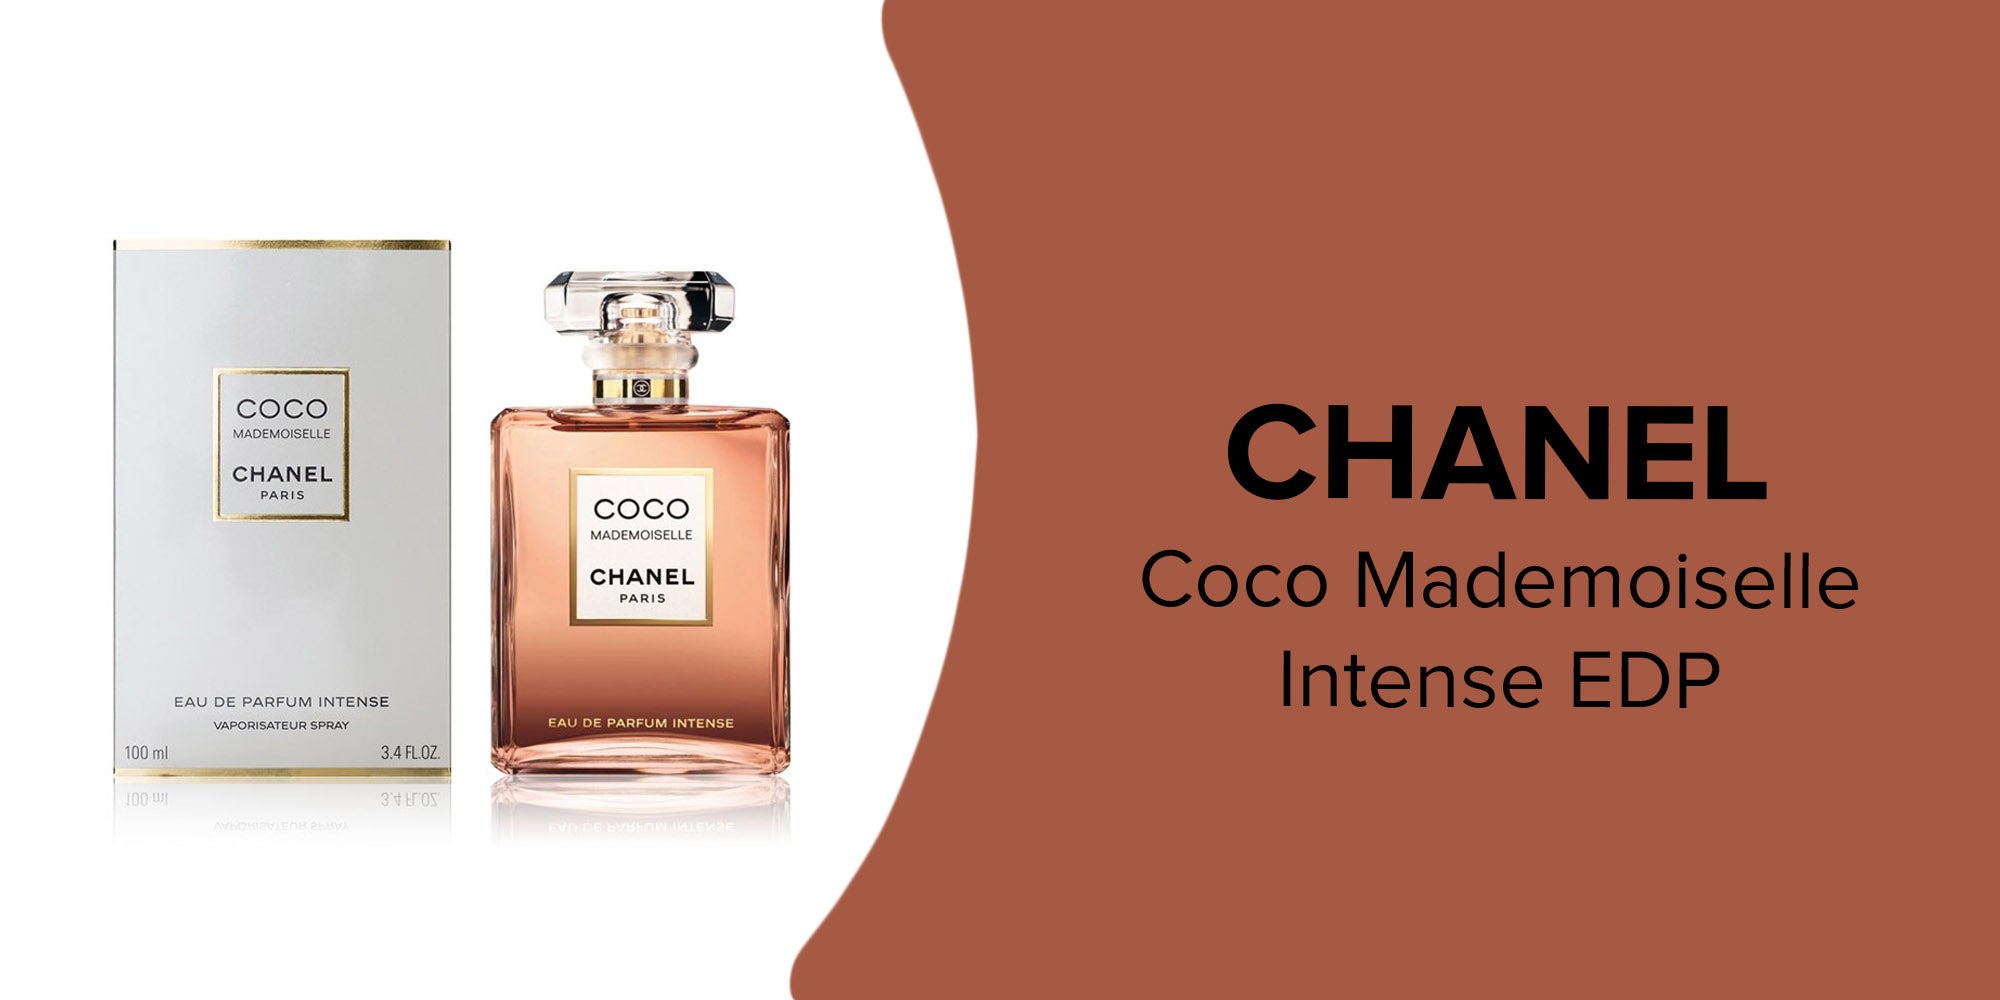 coco chanel perfume fragrance